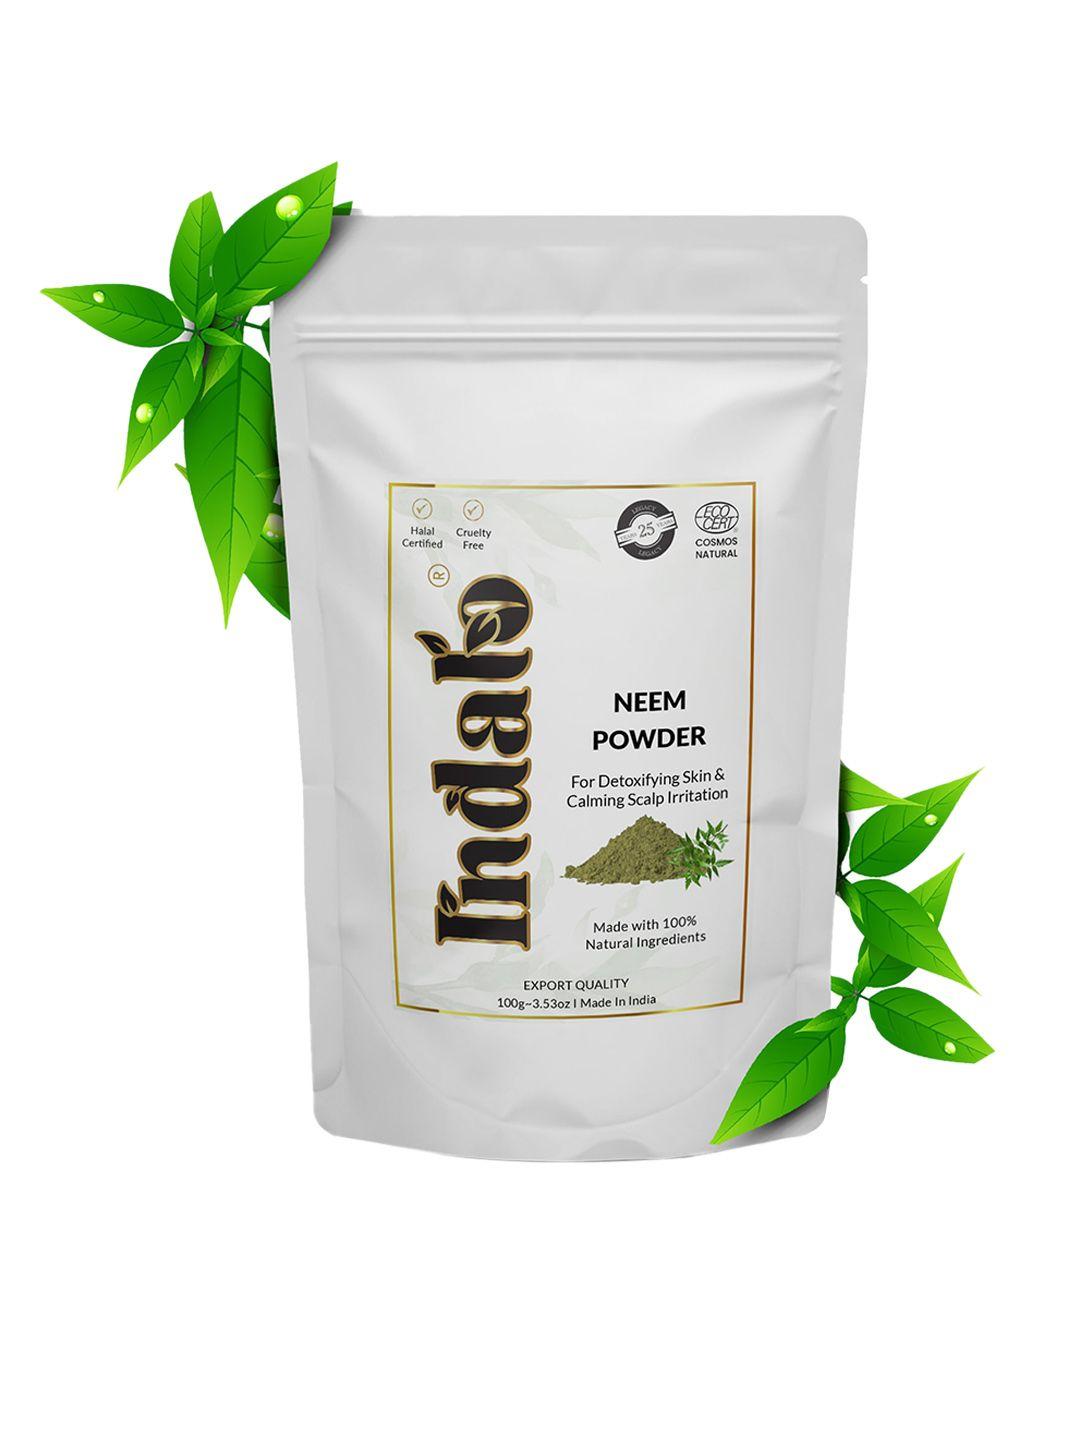 indalo neem powder reduces dark spots & dandruff